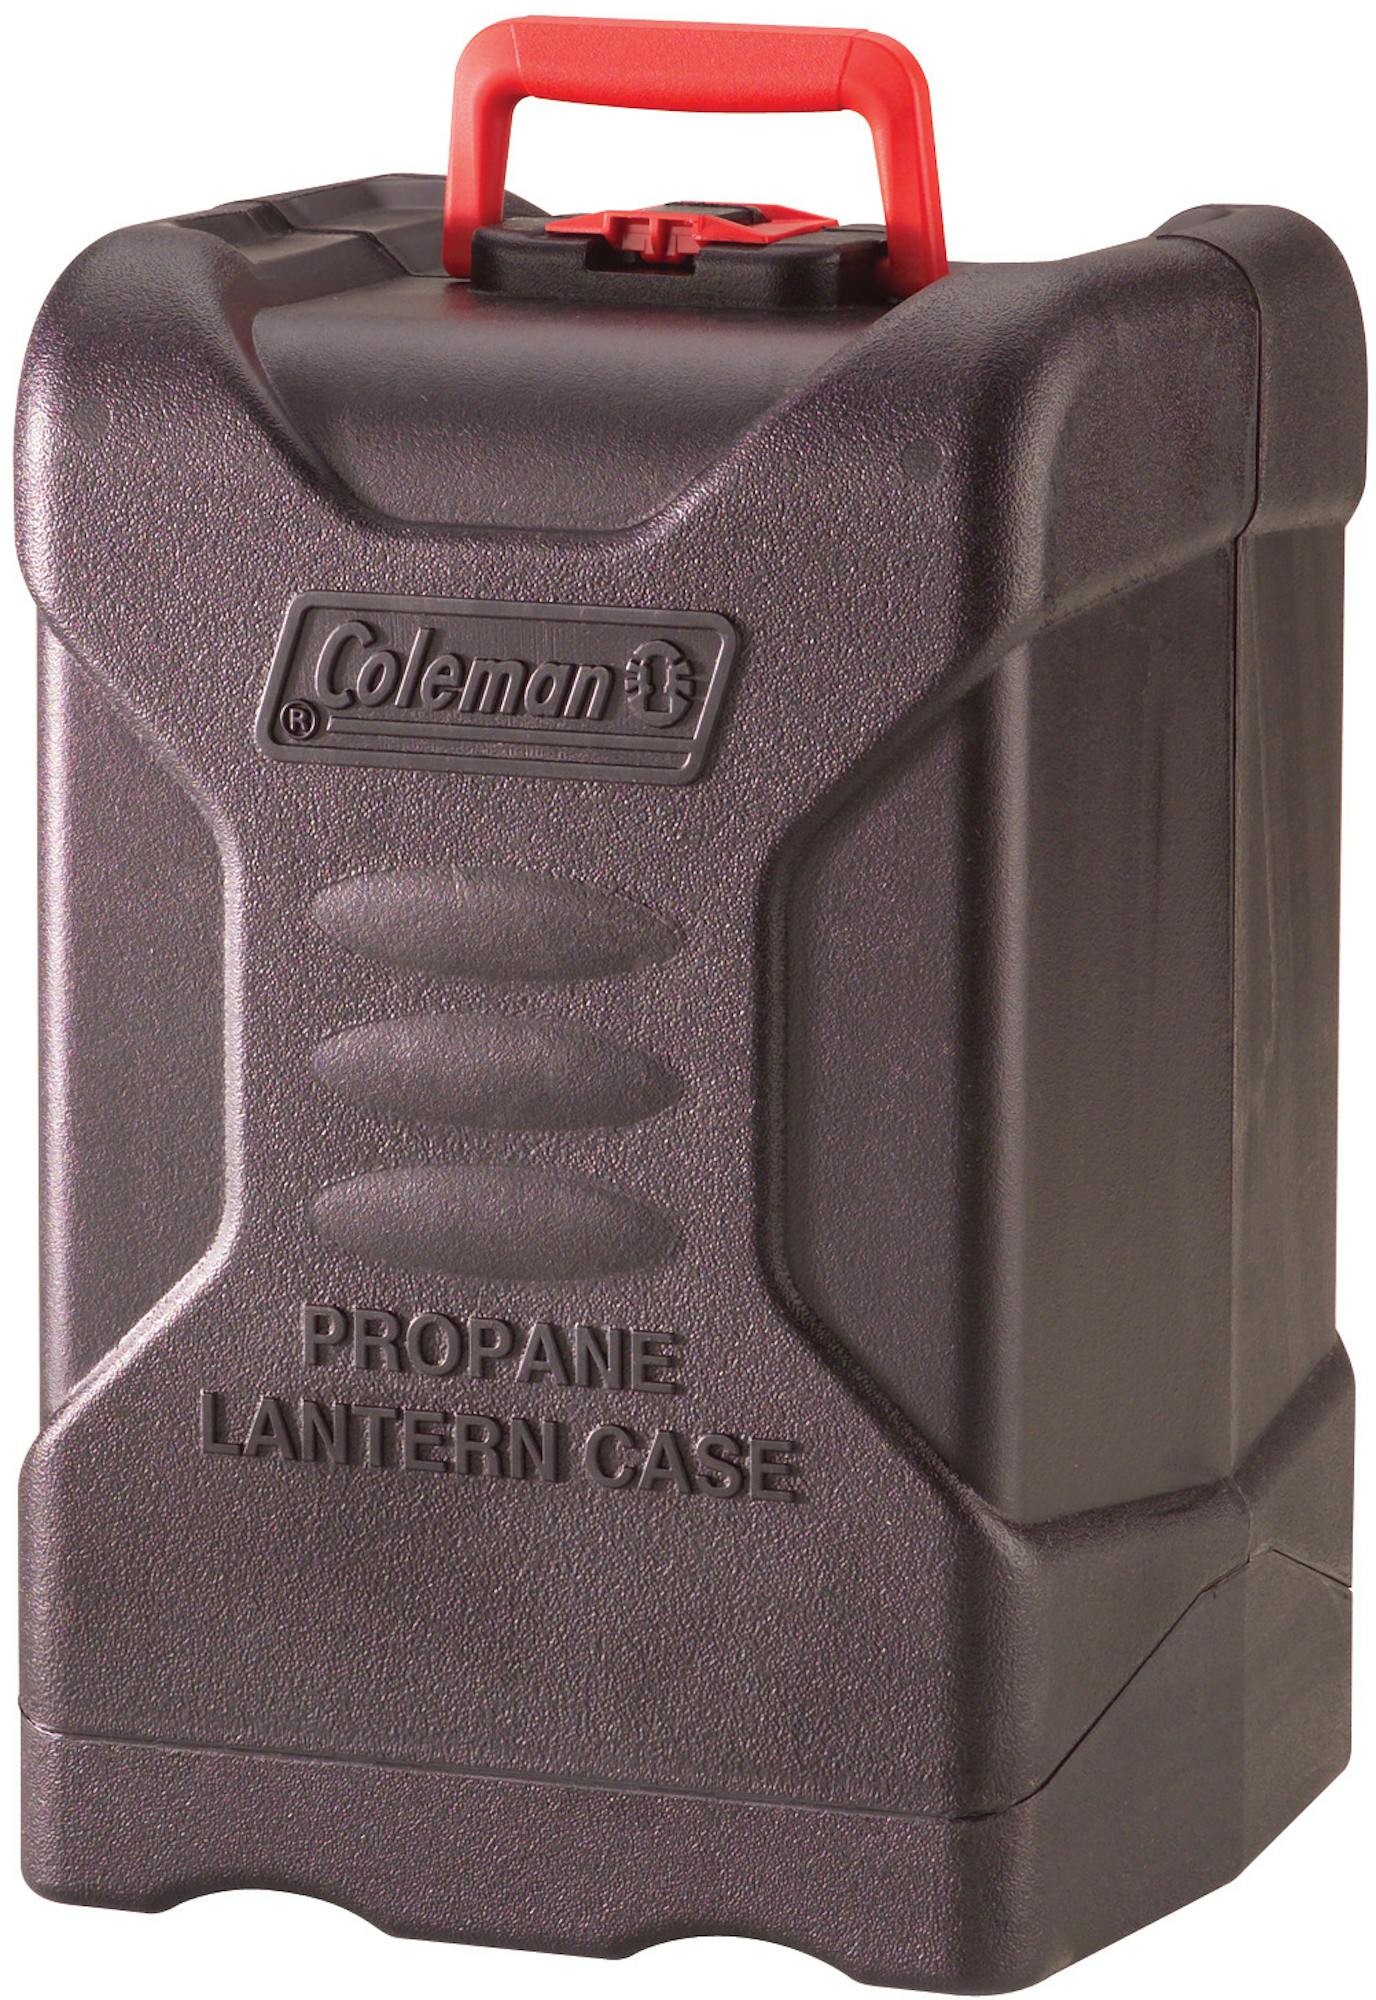 Propane Lantern Carry Case